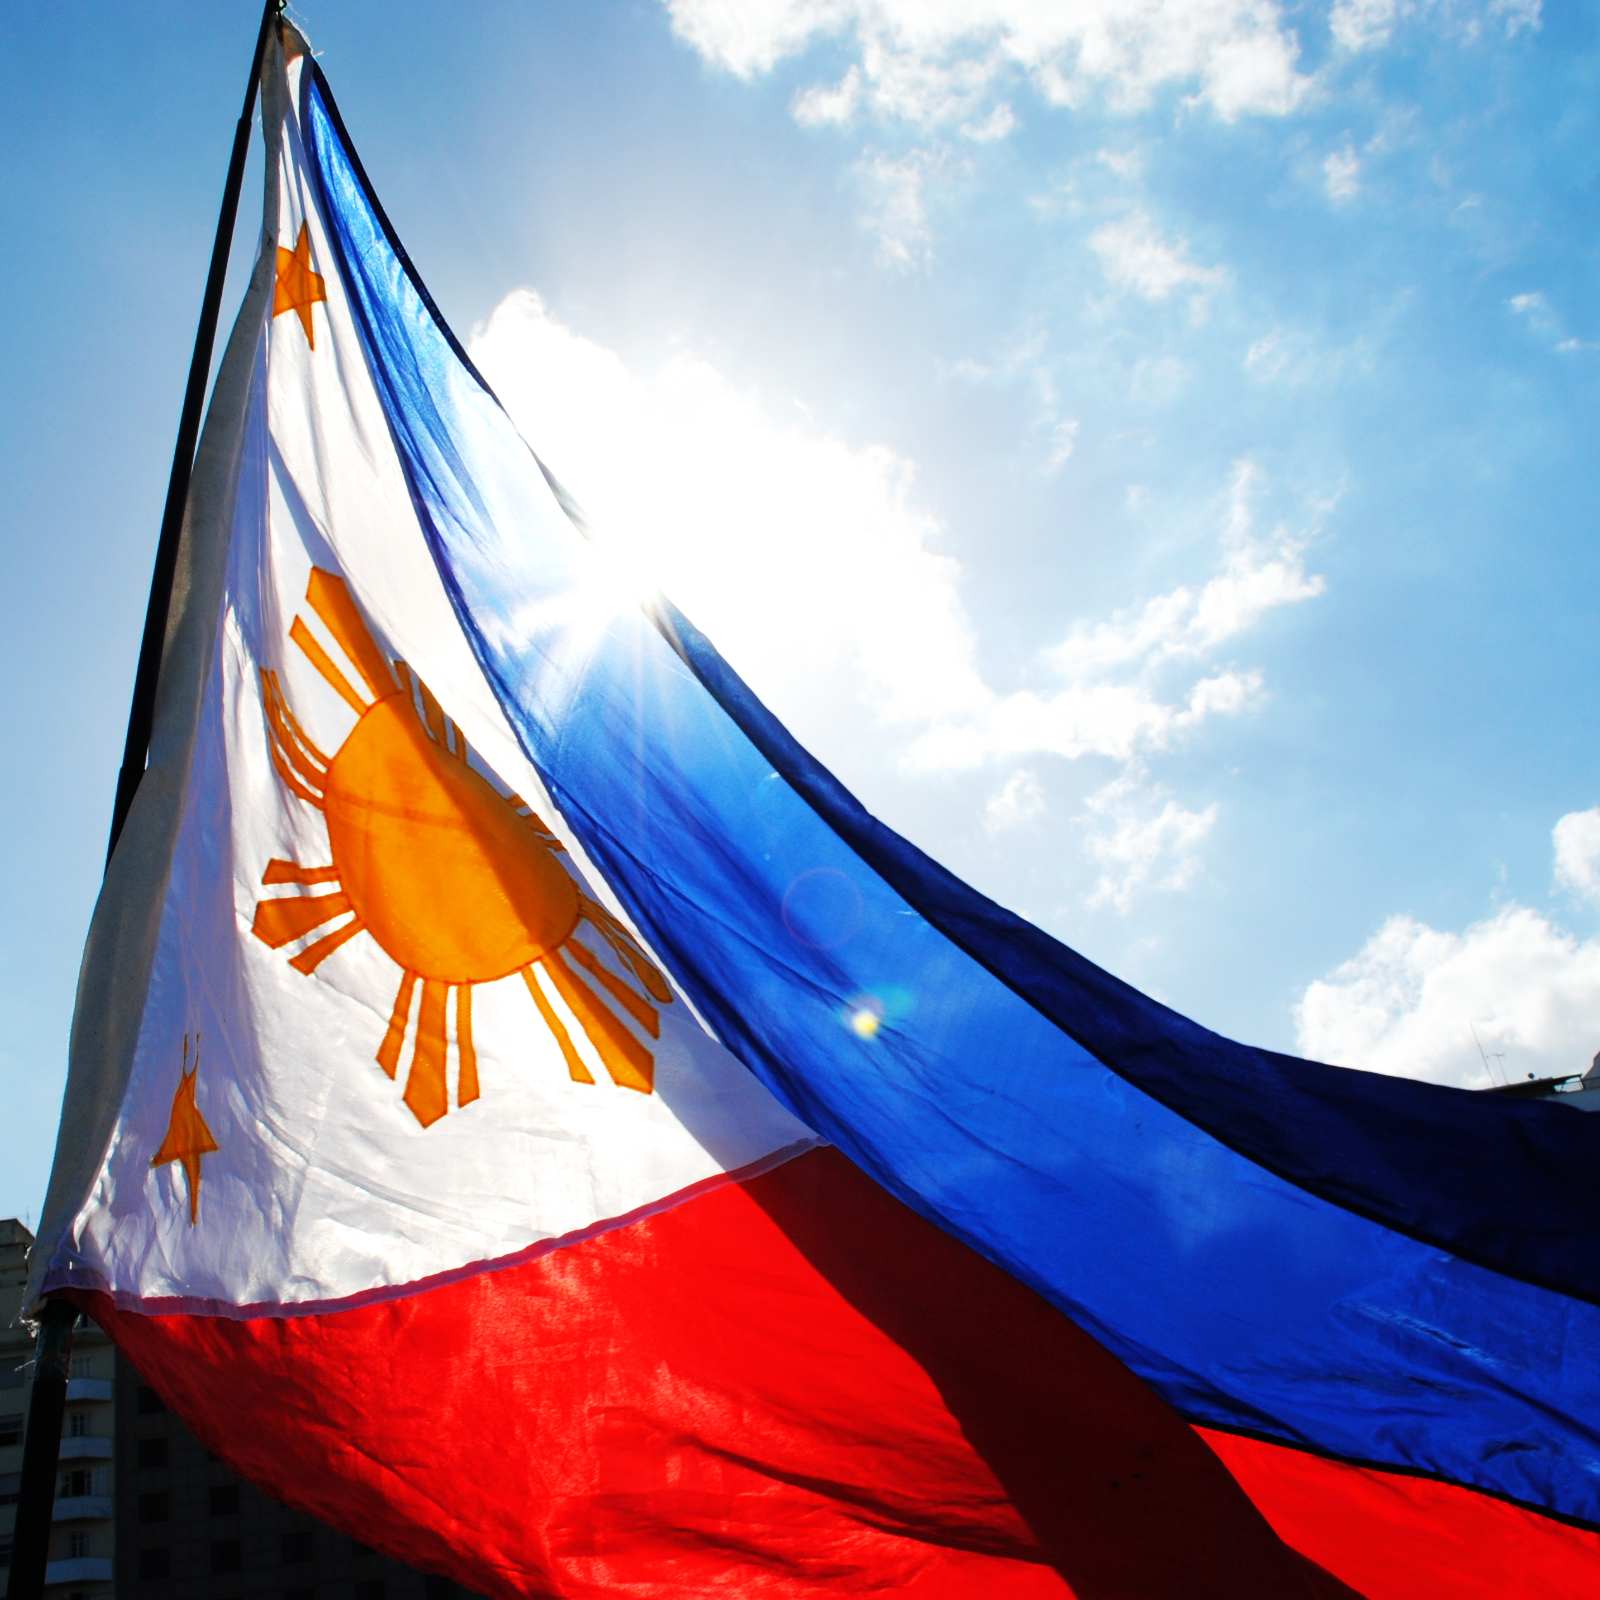 Philippines' Economic Zone Creating Crypto Regulations, Licensing 25 Exchanges